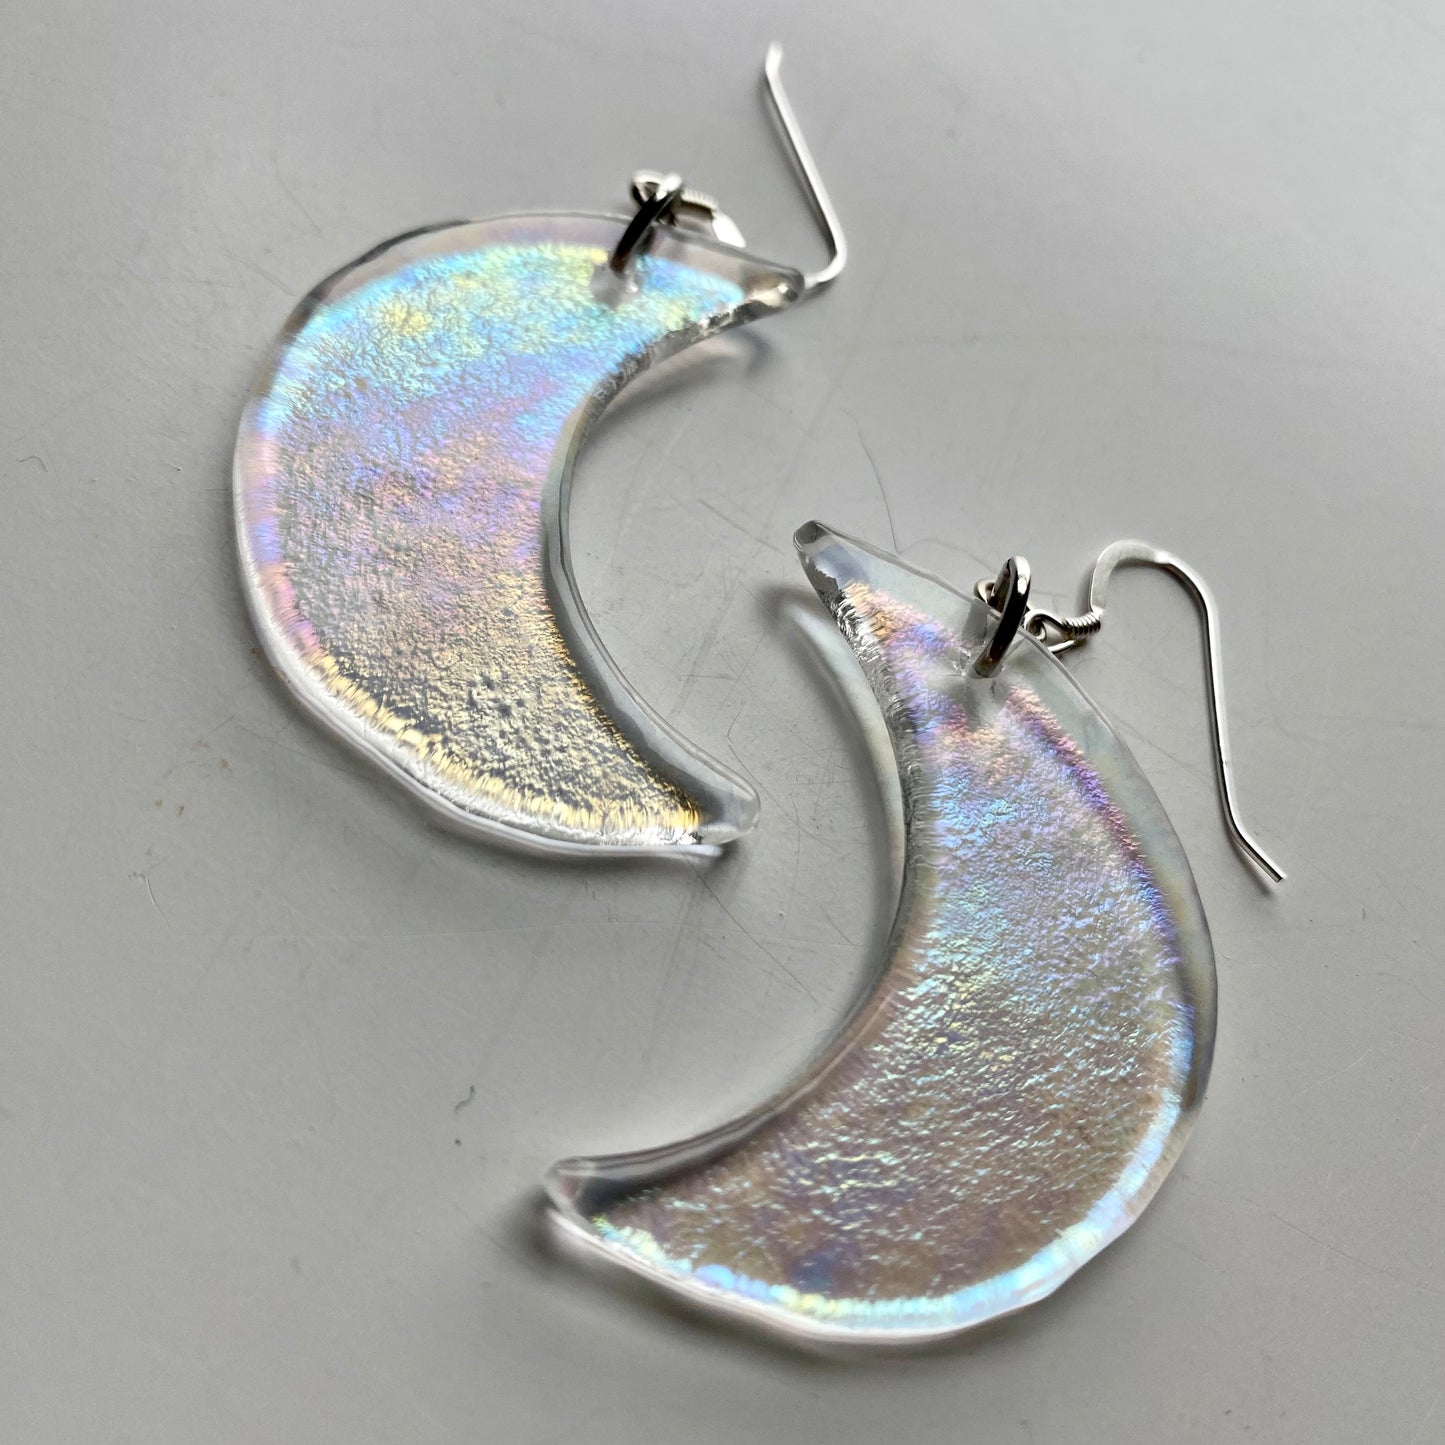 Iridescent Crescent Moon Earrings